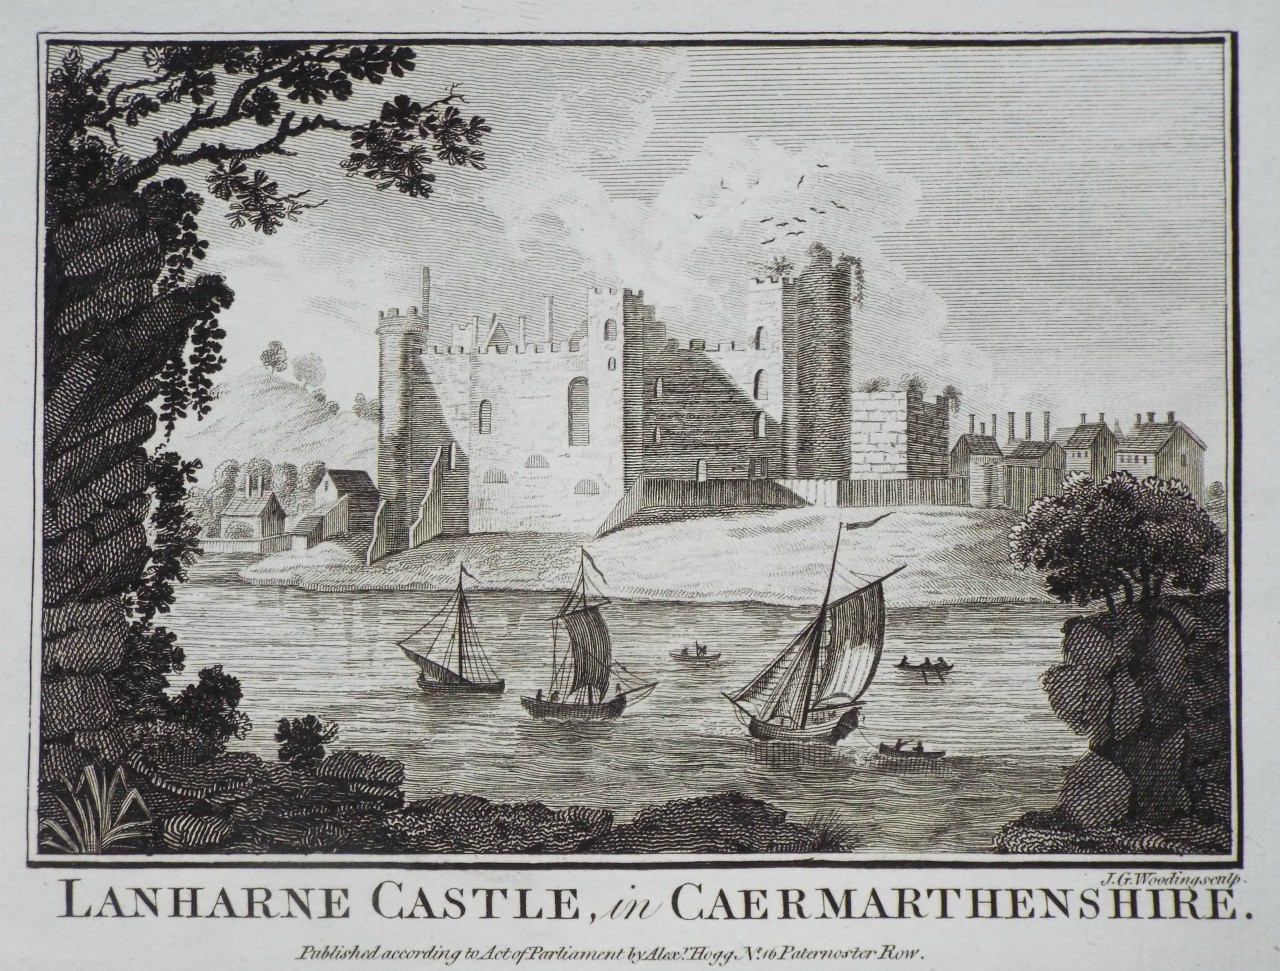 Print - Lanharne Castle, in Caermarthenshire. - Wooding